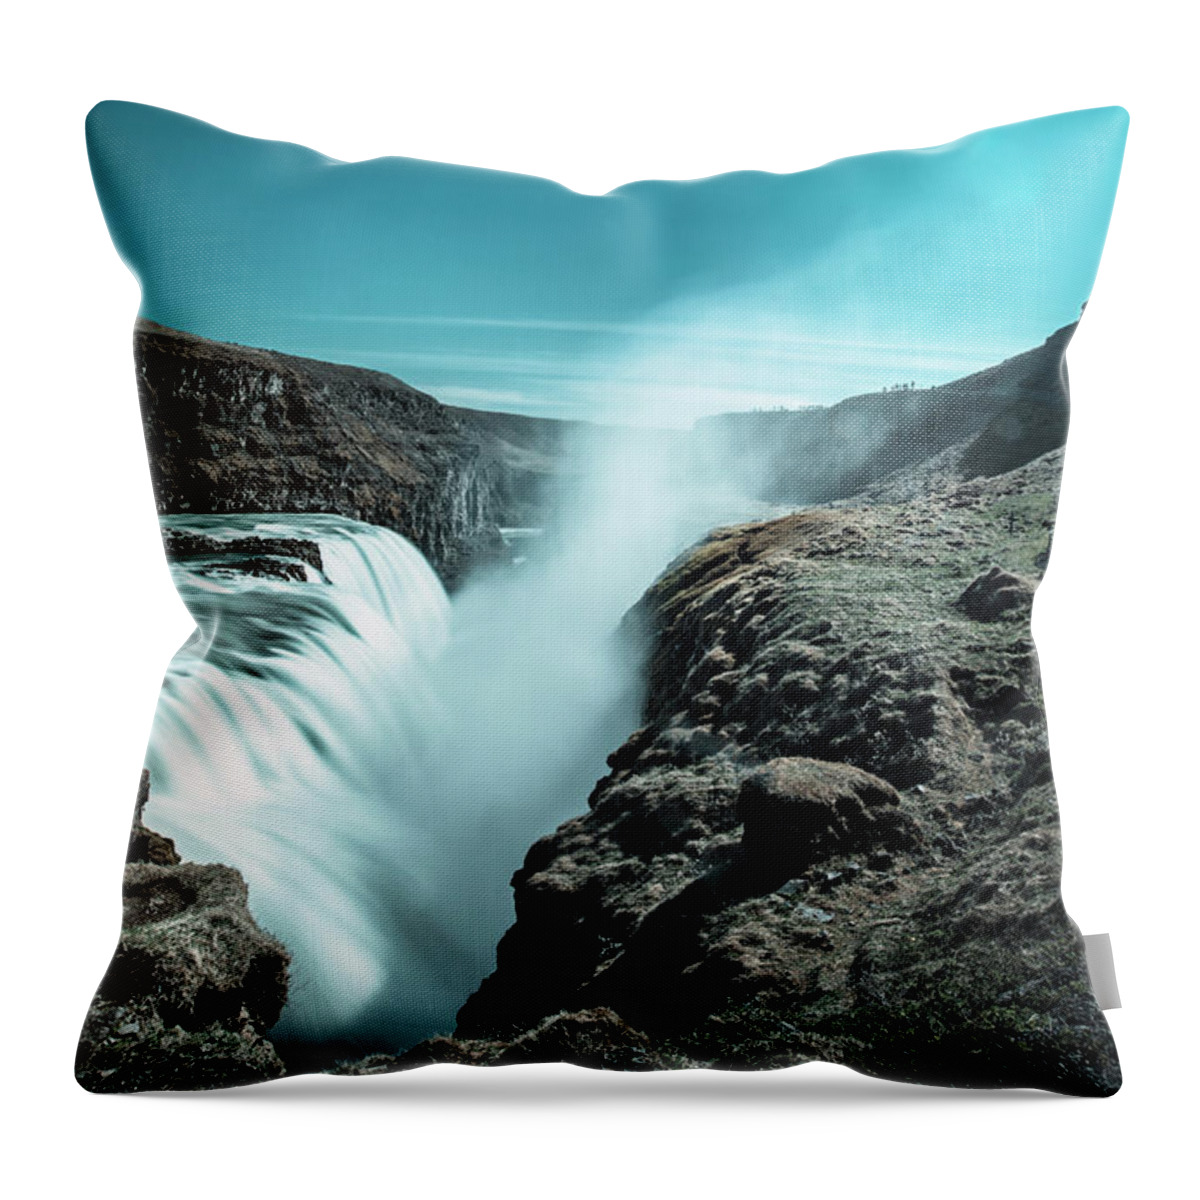 Scenics Throw Pillow featuring the photograph Gullfoss by Xavierarnau